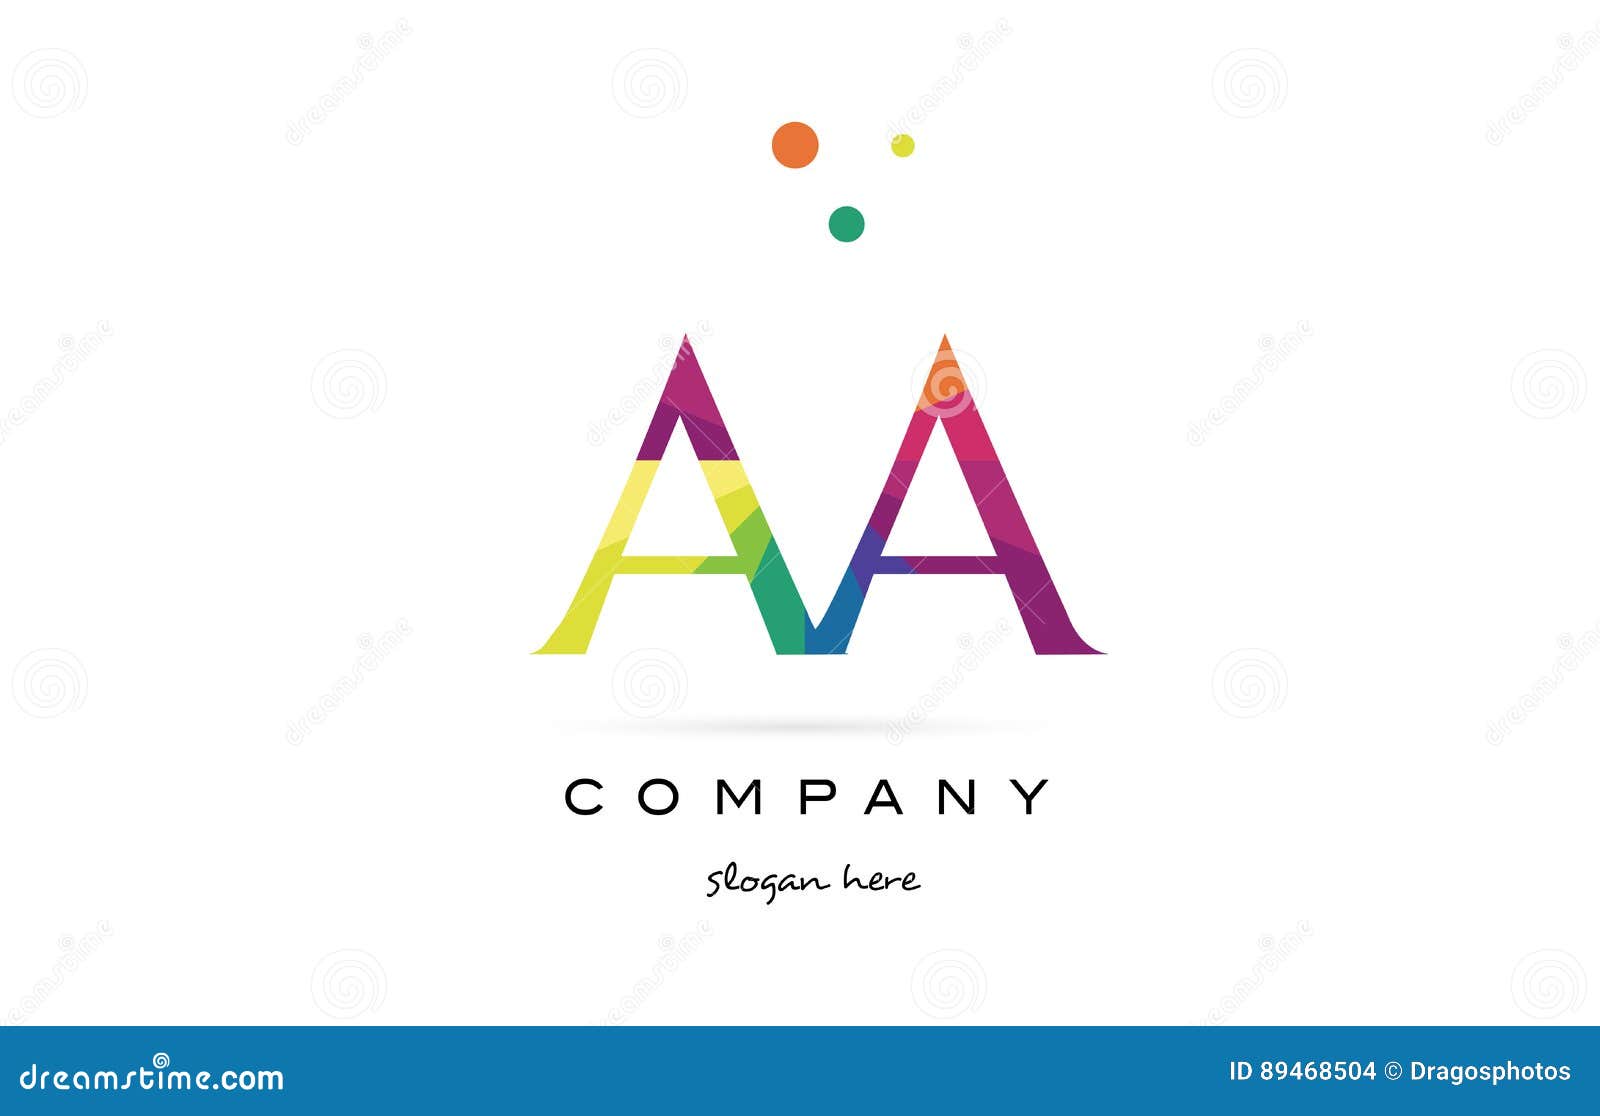 P alphabet letter rainbow colored logo company icon design, Stock vector